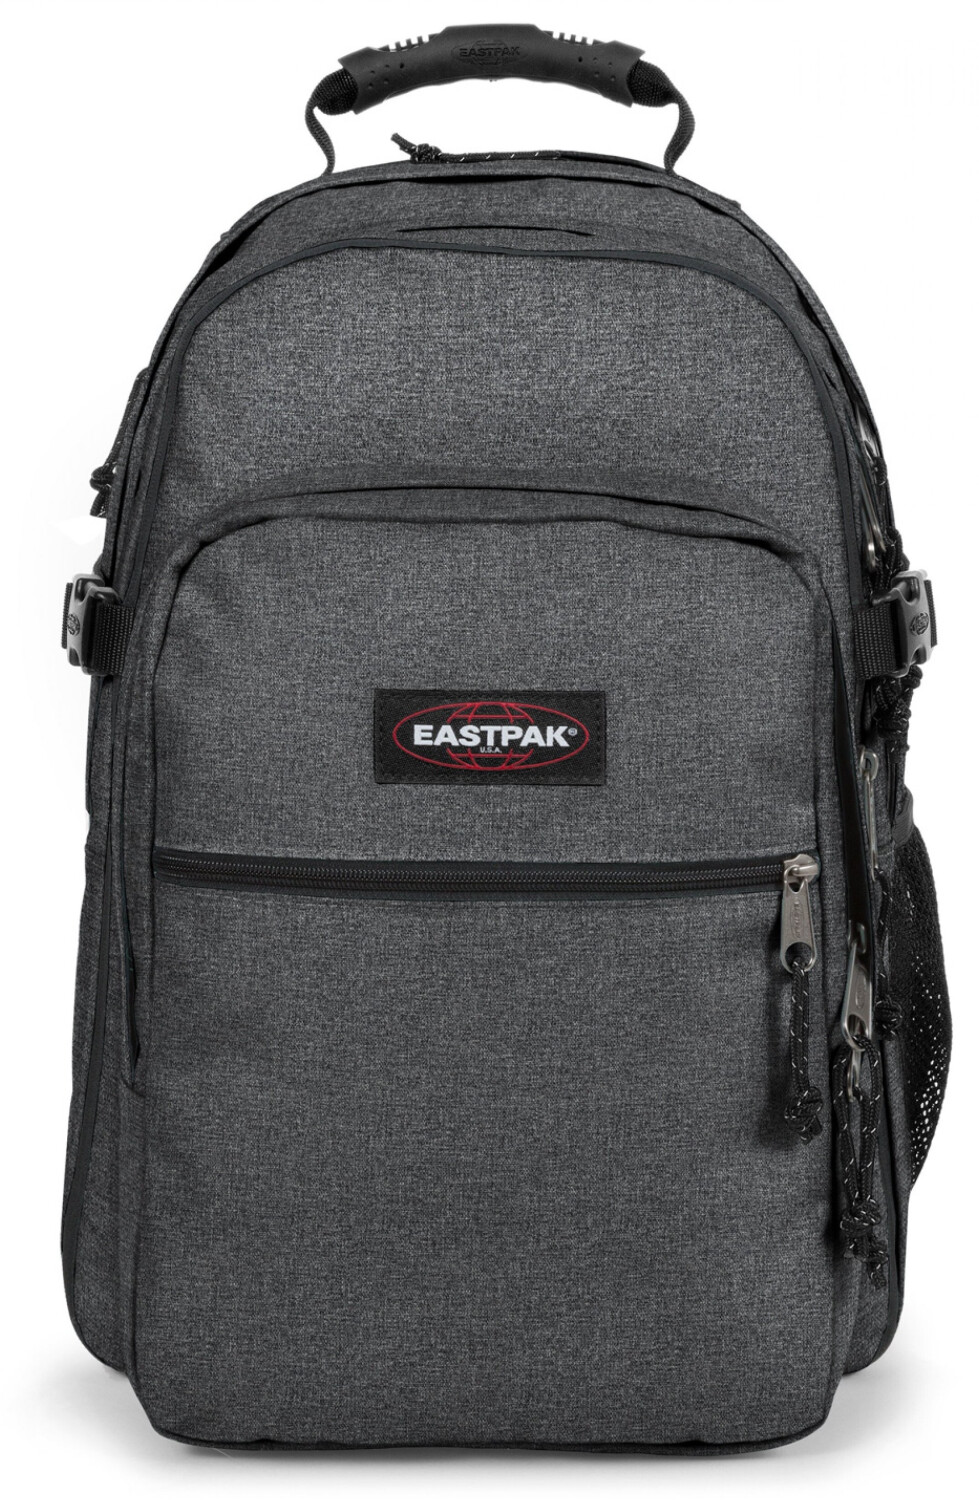 Photos - Backpack EASTPAK Tutor black denim 